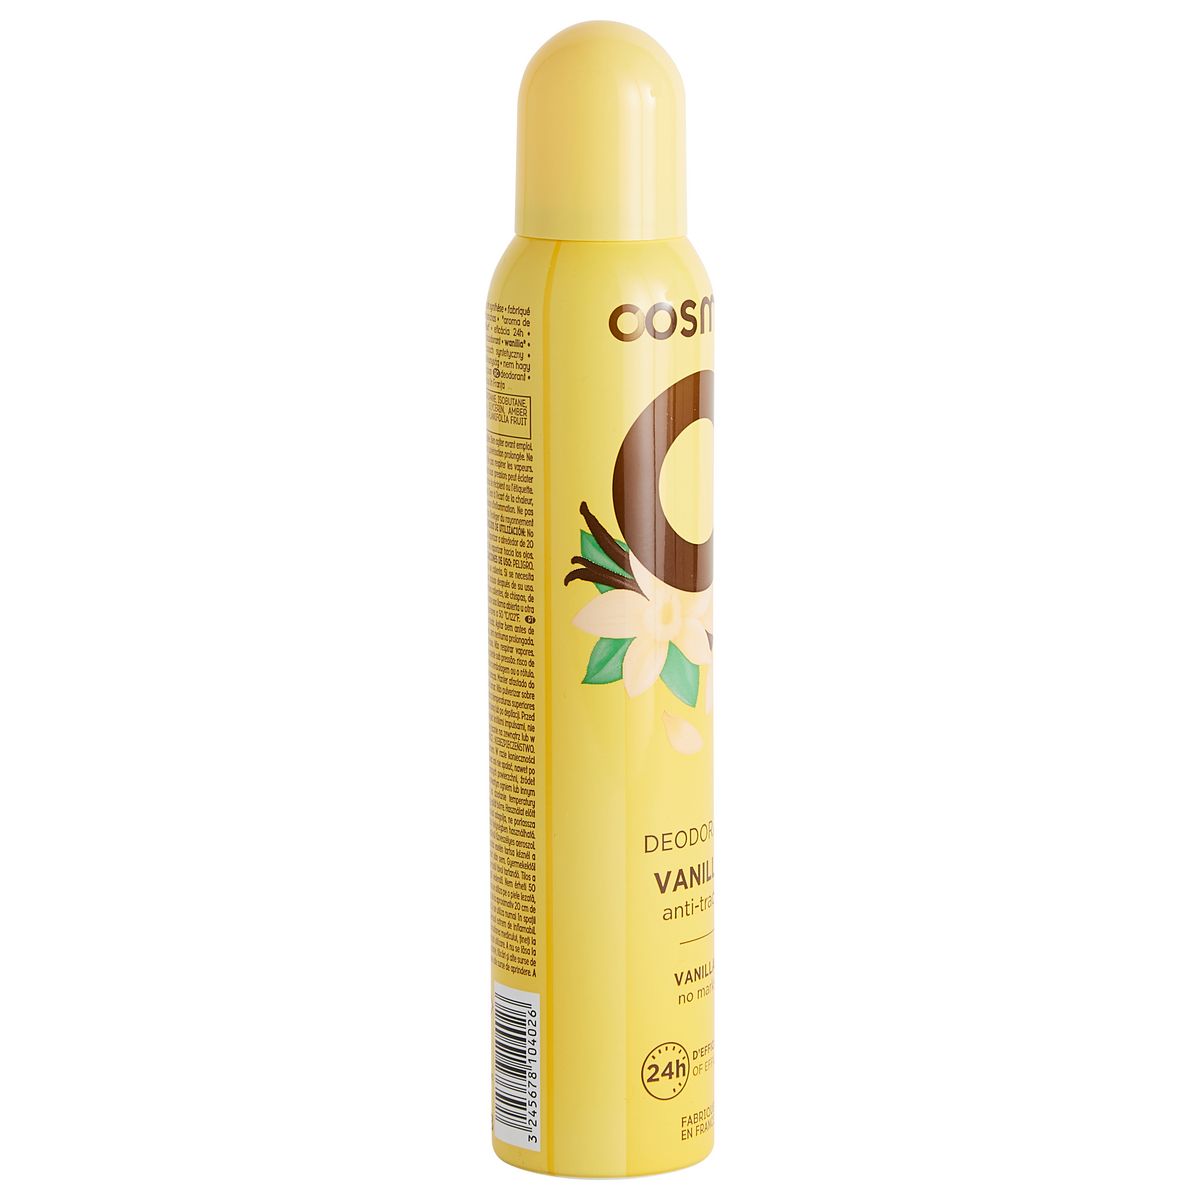 COSMIA Déodorant spray 24h vanille anti-traces 200ml